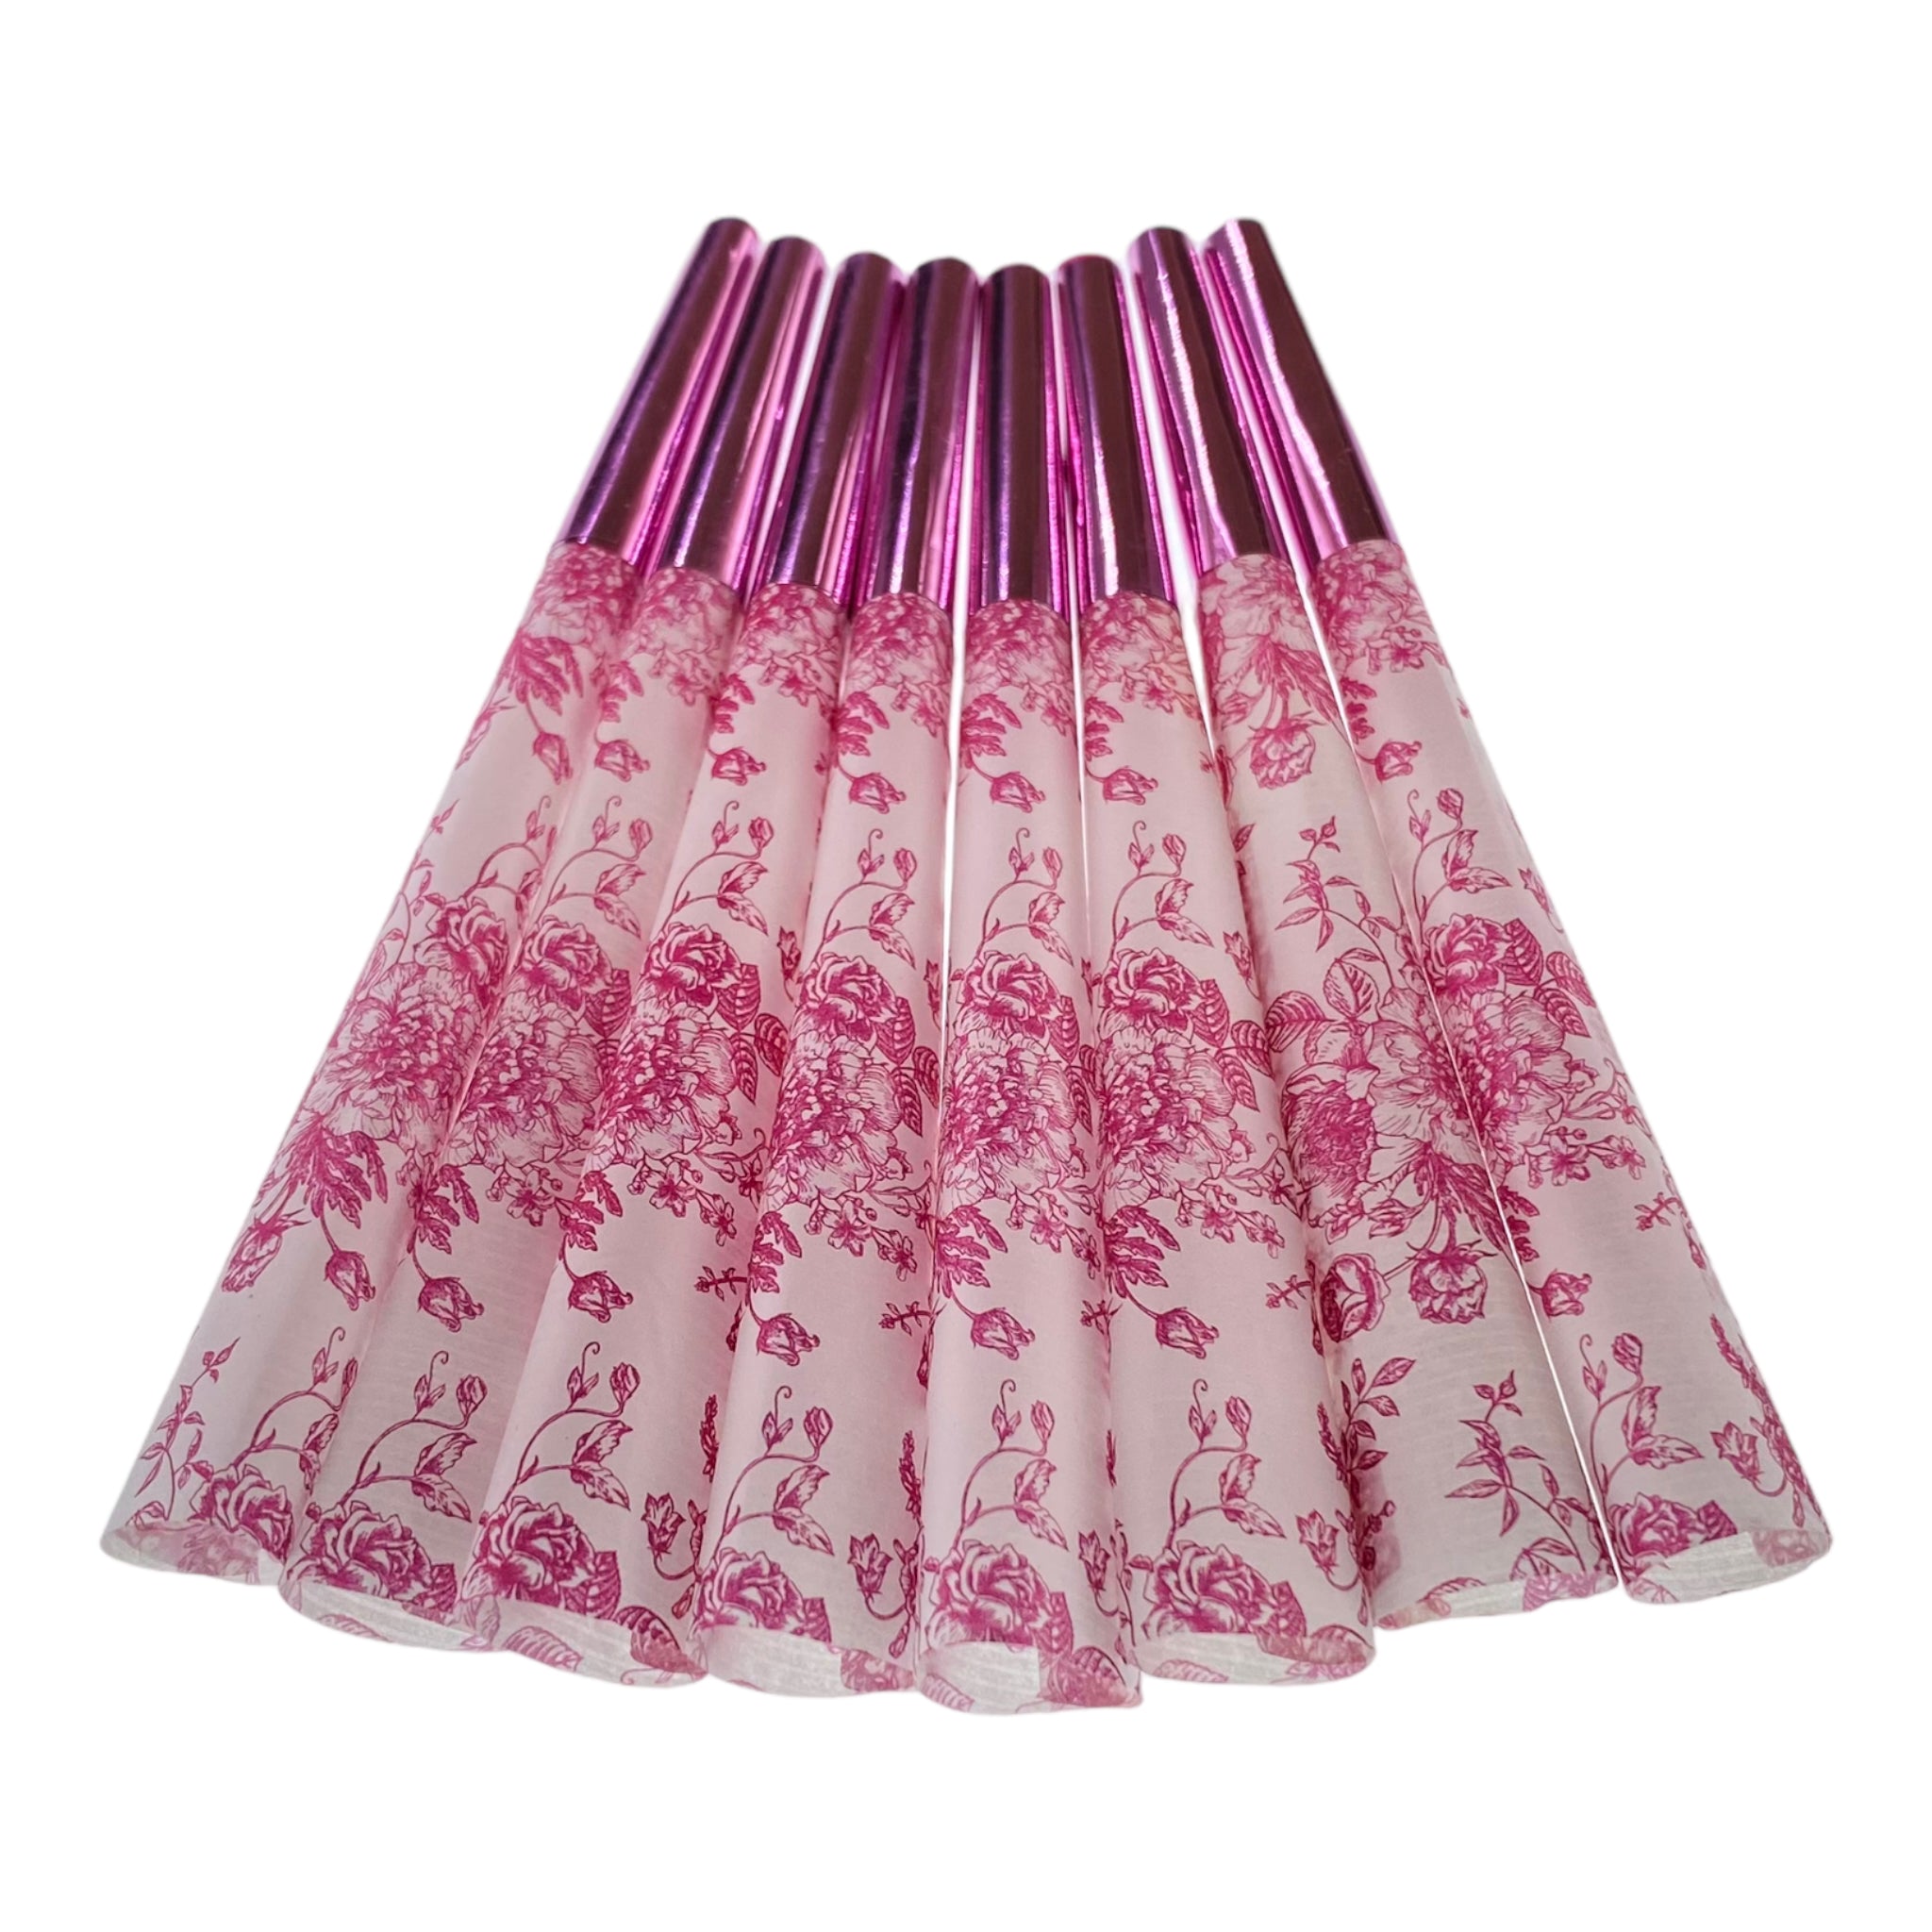 Beautiful Burns - Pink Roses Pre Rolled Cones 8ct